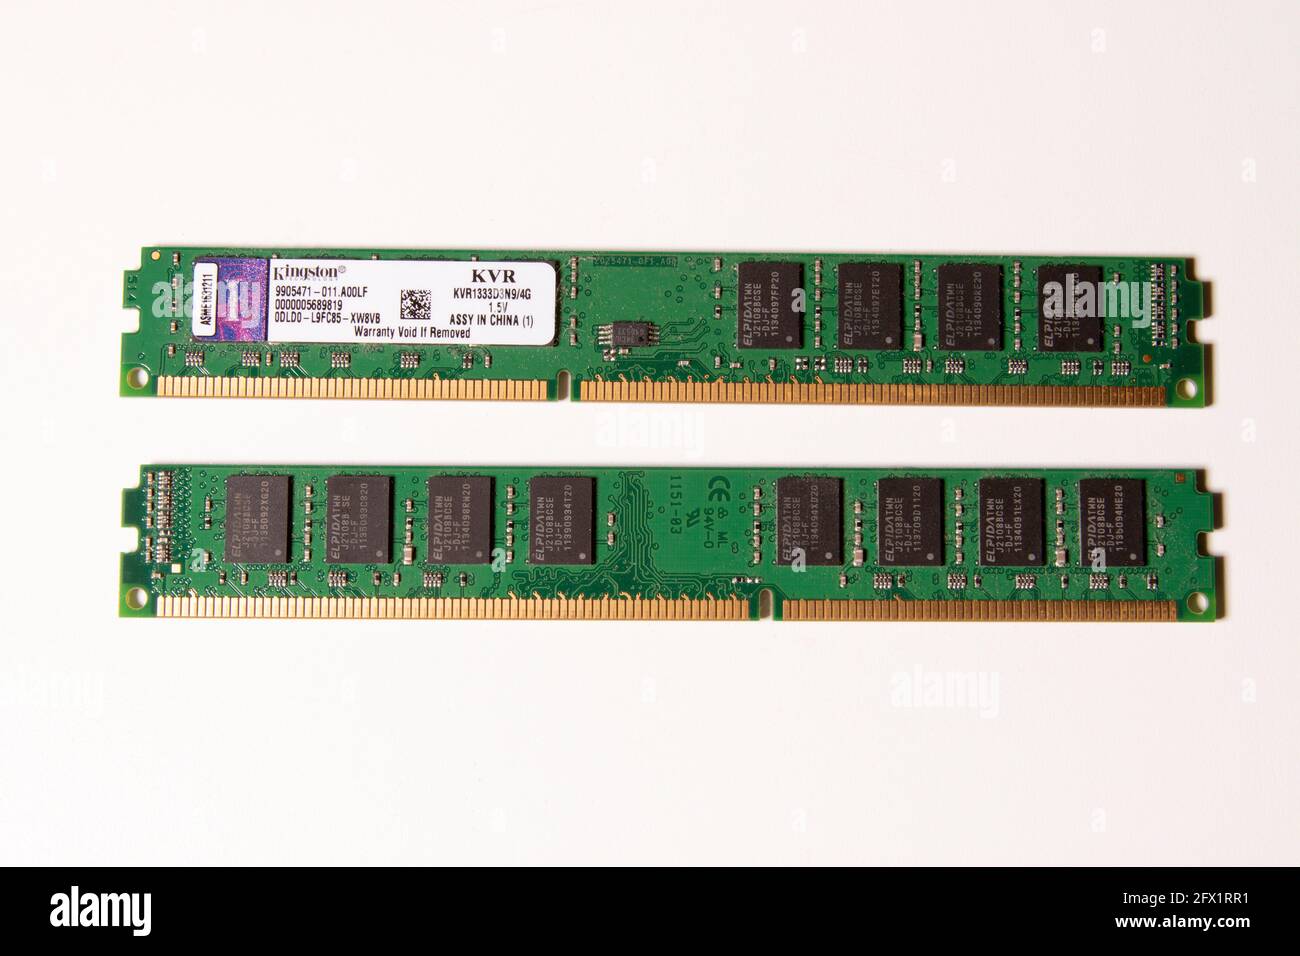 Kingston 4GB Memory Modules Stock Photo - Alamy